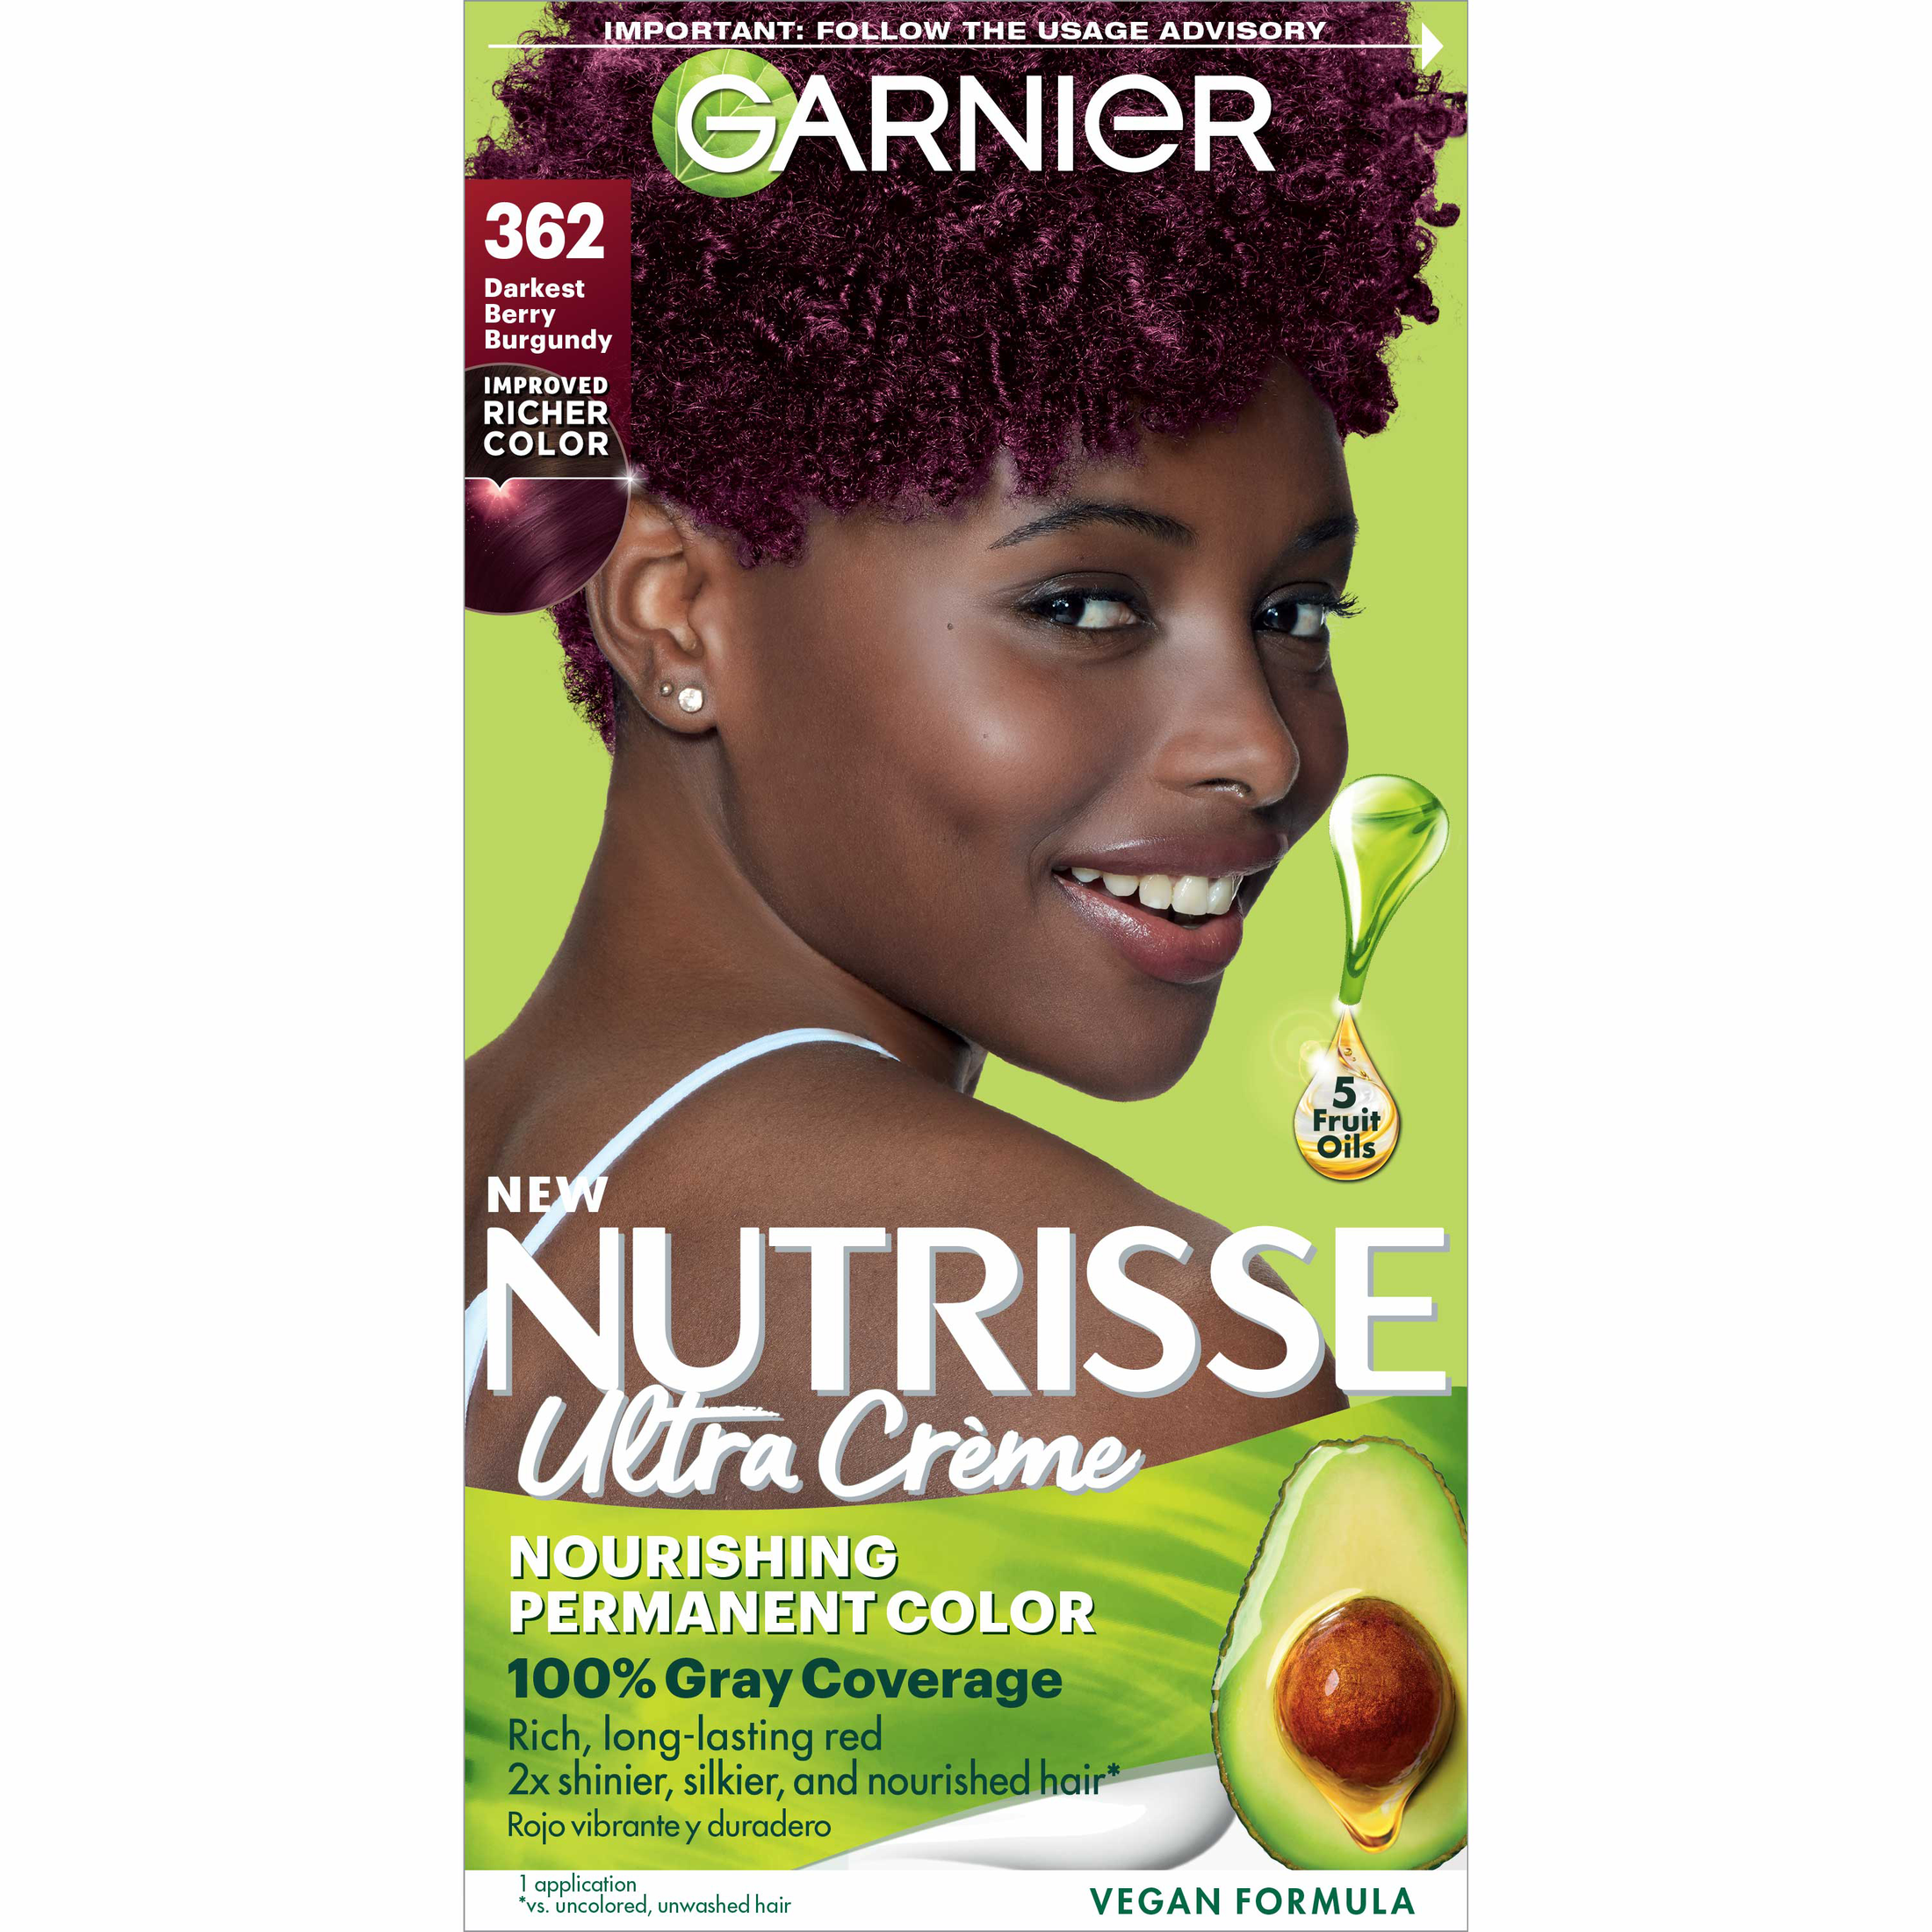 Garnier Nutrisse Nourishing Hair Color Creme, 362 Darkest Berry Burgundy - image 1 of 11